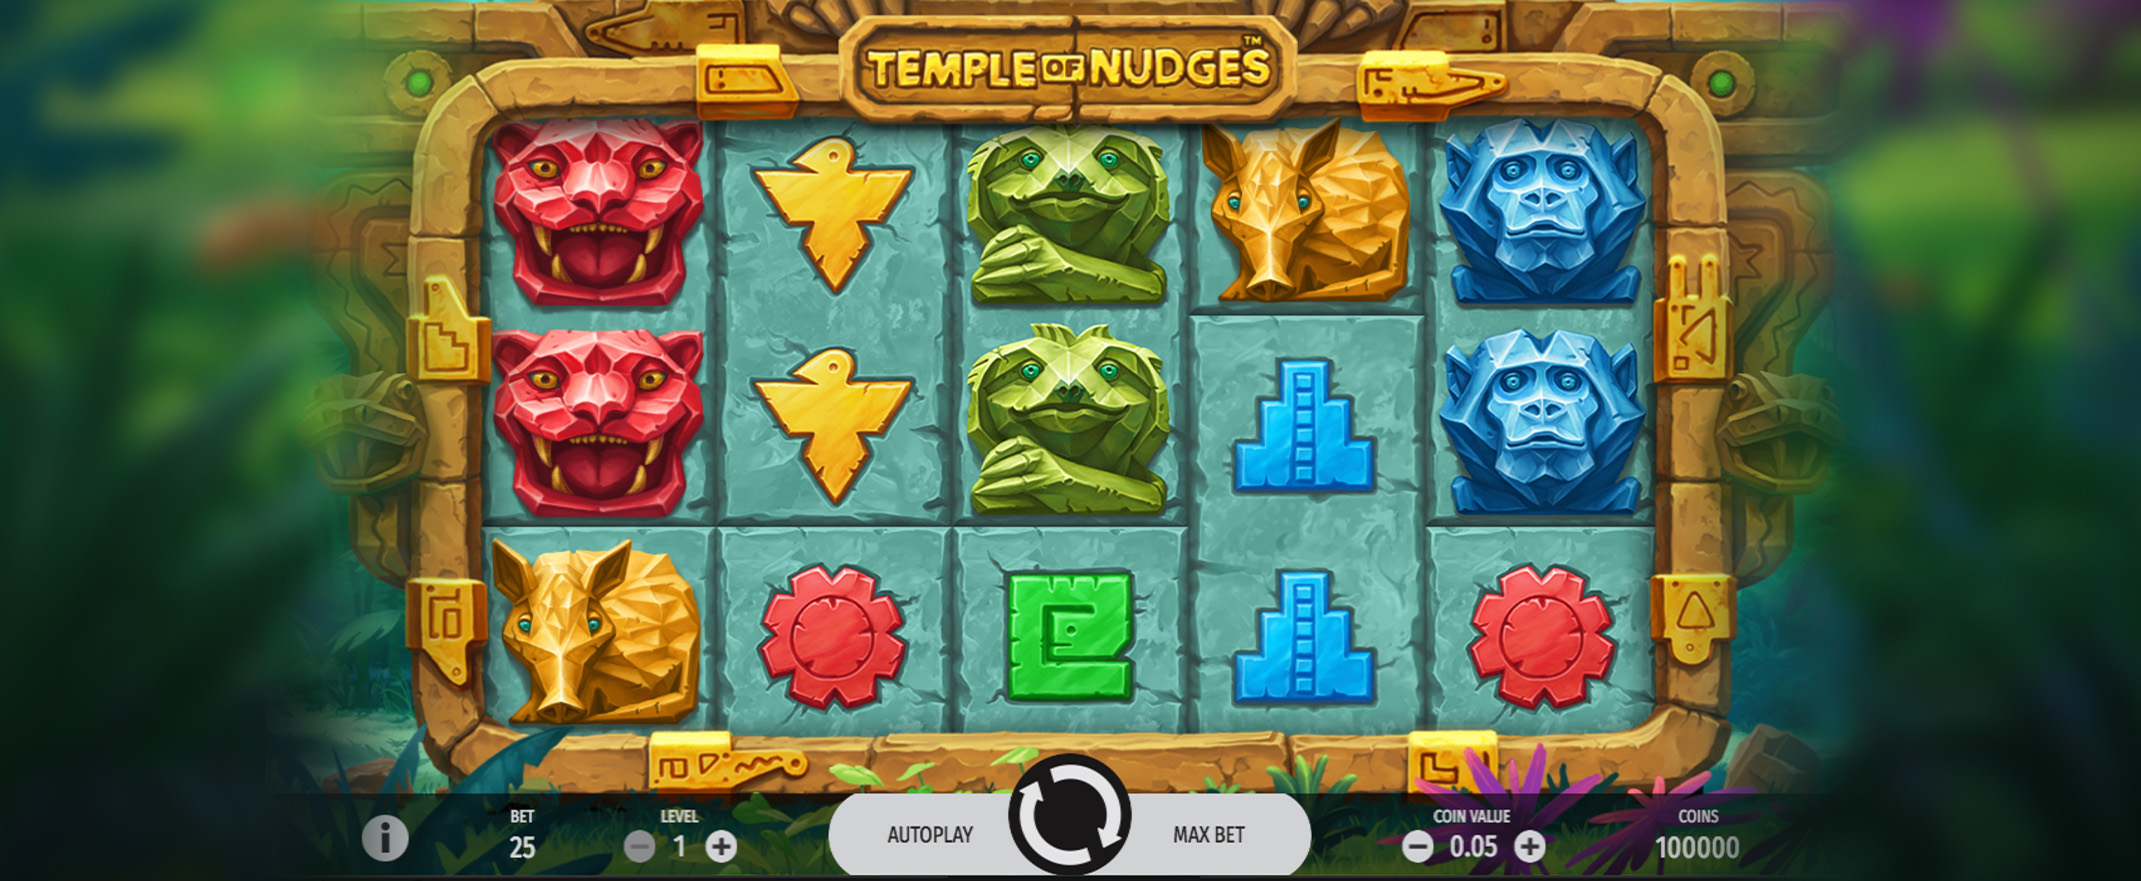 Temple of Nudges spilleautomat